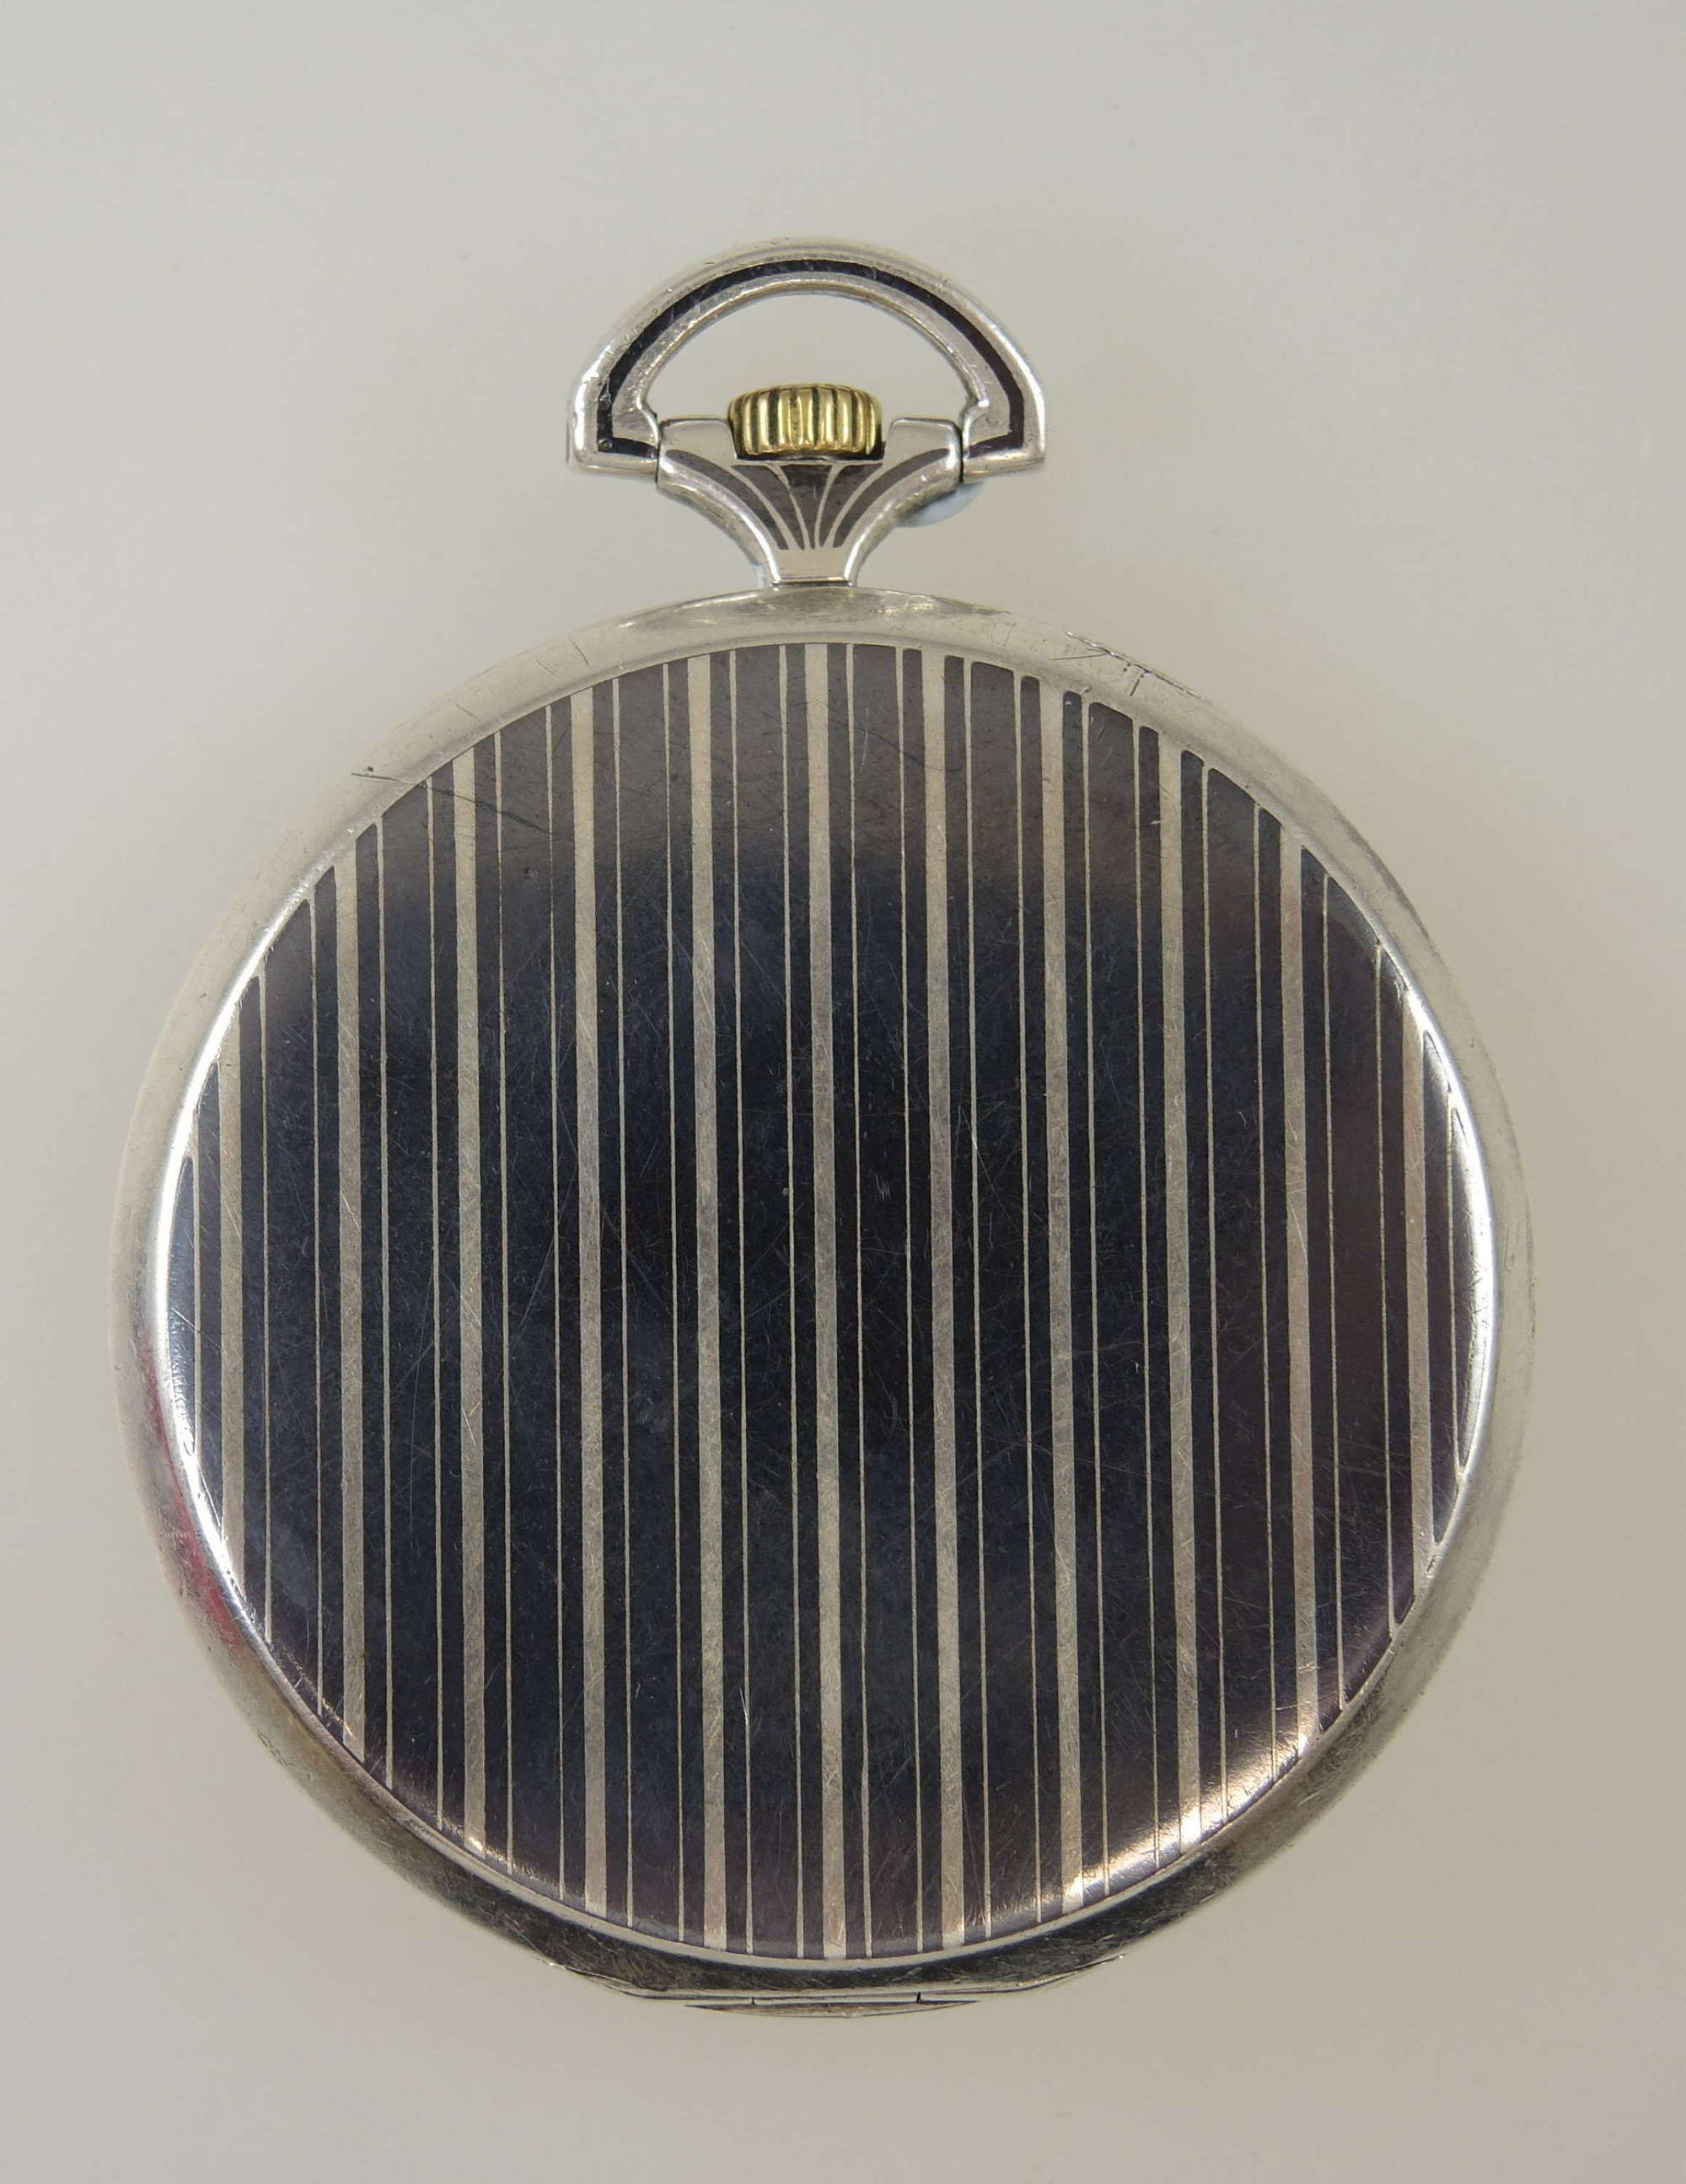 Art Nouveau silver and niello enamel pocket watch c1910